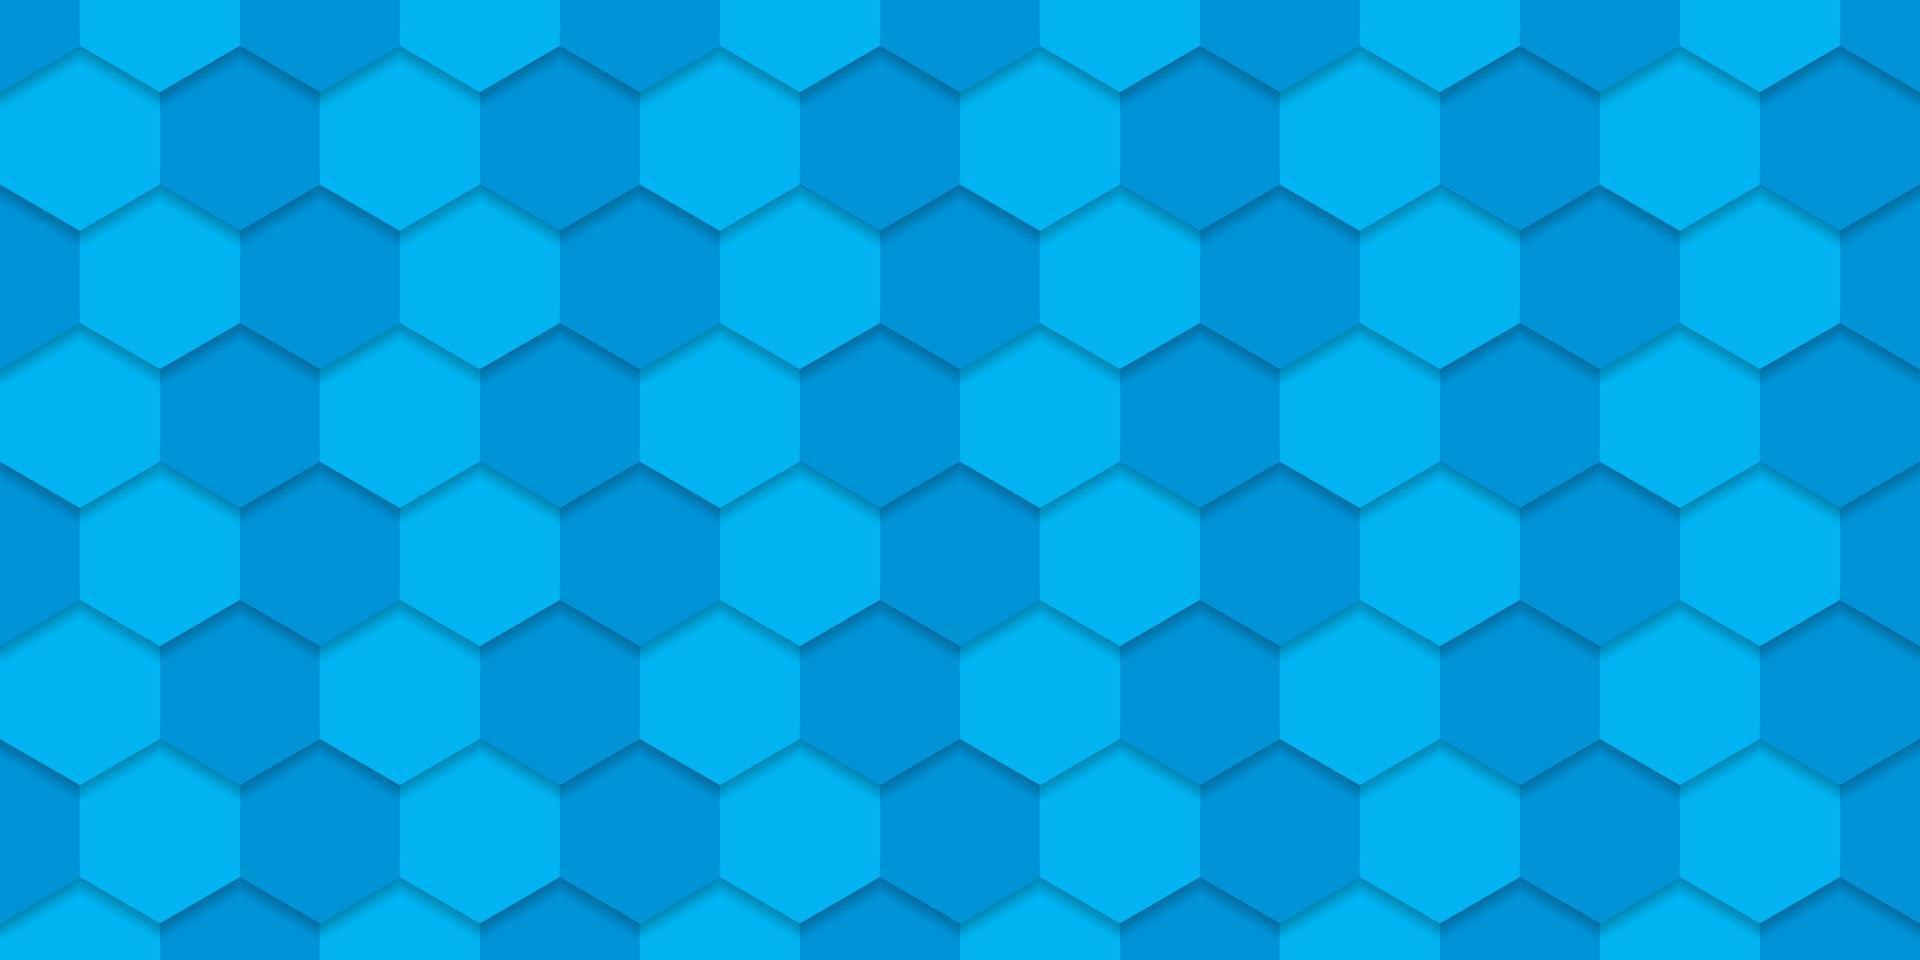 Futuristic Light Blue Hexagon Background. Digital Blank Blue Banner for Chemistry, Science, Technology. Abstract 3D Hexagonal Bright Blue Pattern. Modern Wallpaper Design. Vector Illustration.